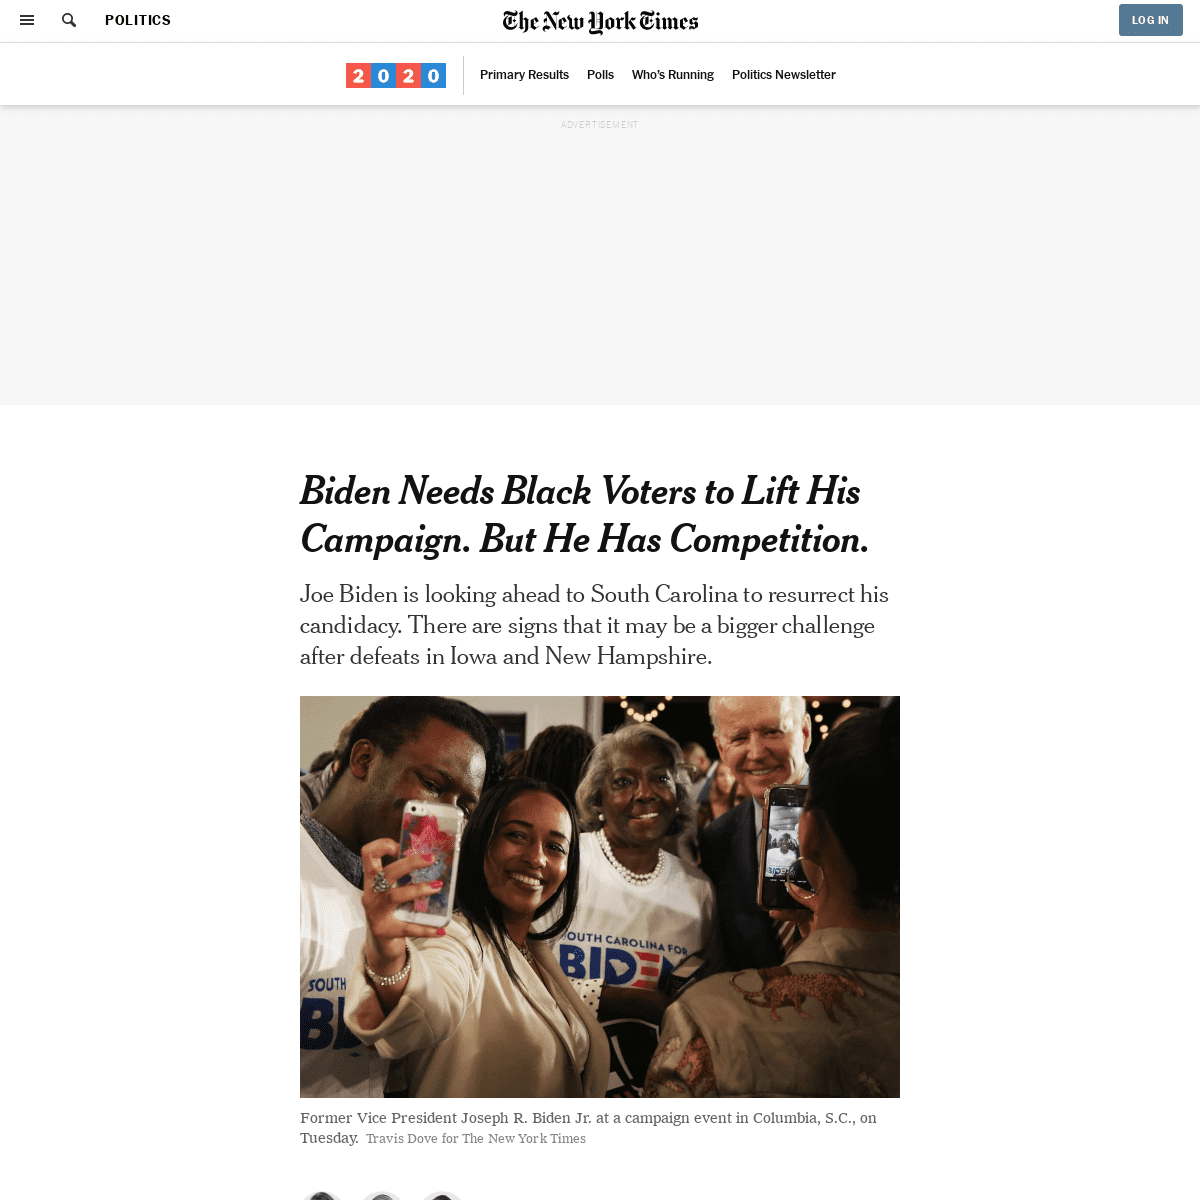 A complete backup of www.nytimes.com/2020/02/13/us/politics/biden-black-voters-south-carolina.html